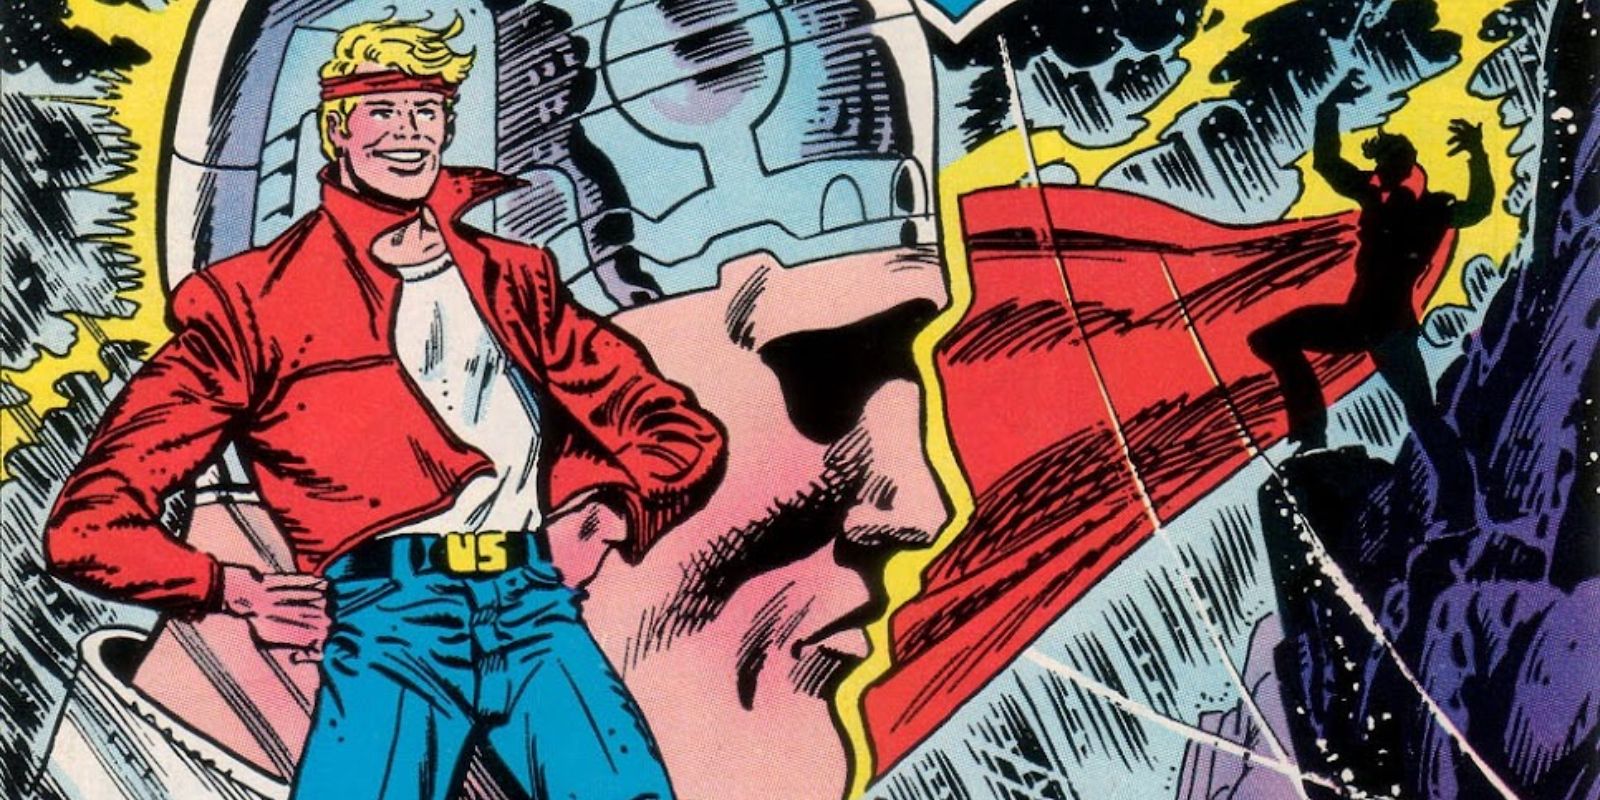 Marvel Comics' Worst Series U.S. 1 Doesn't Deserve Hate